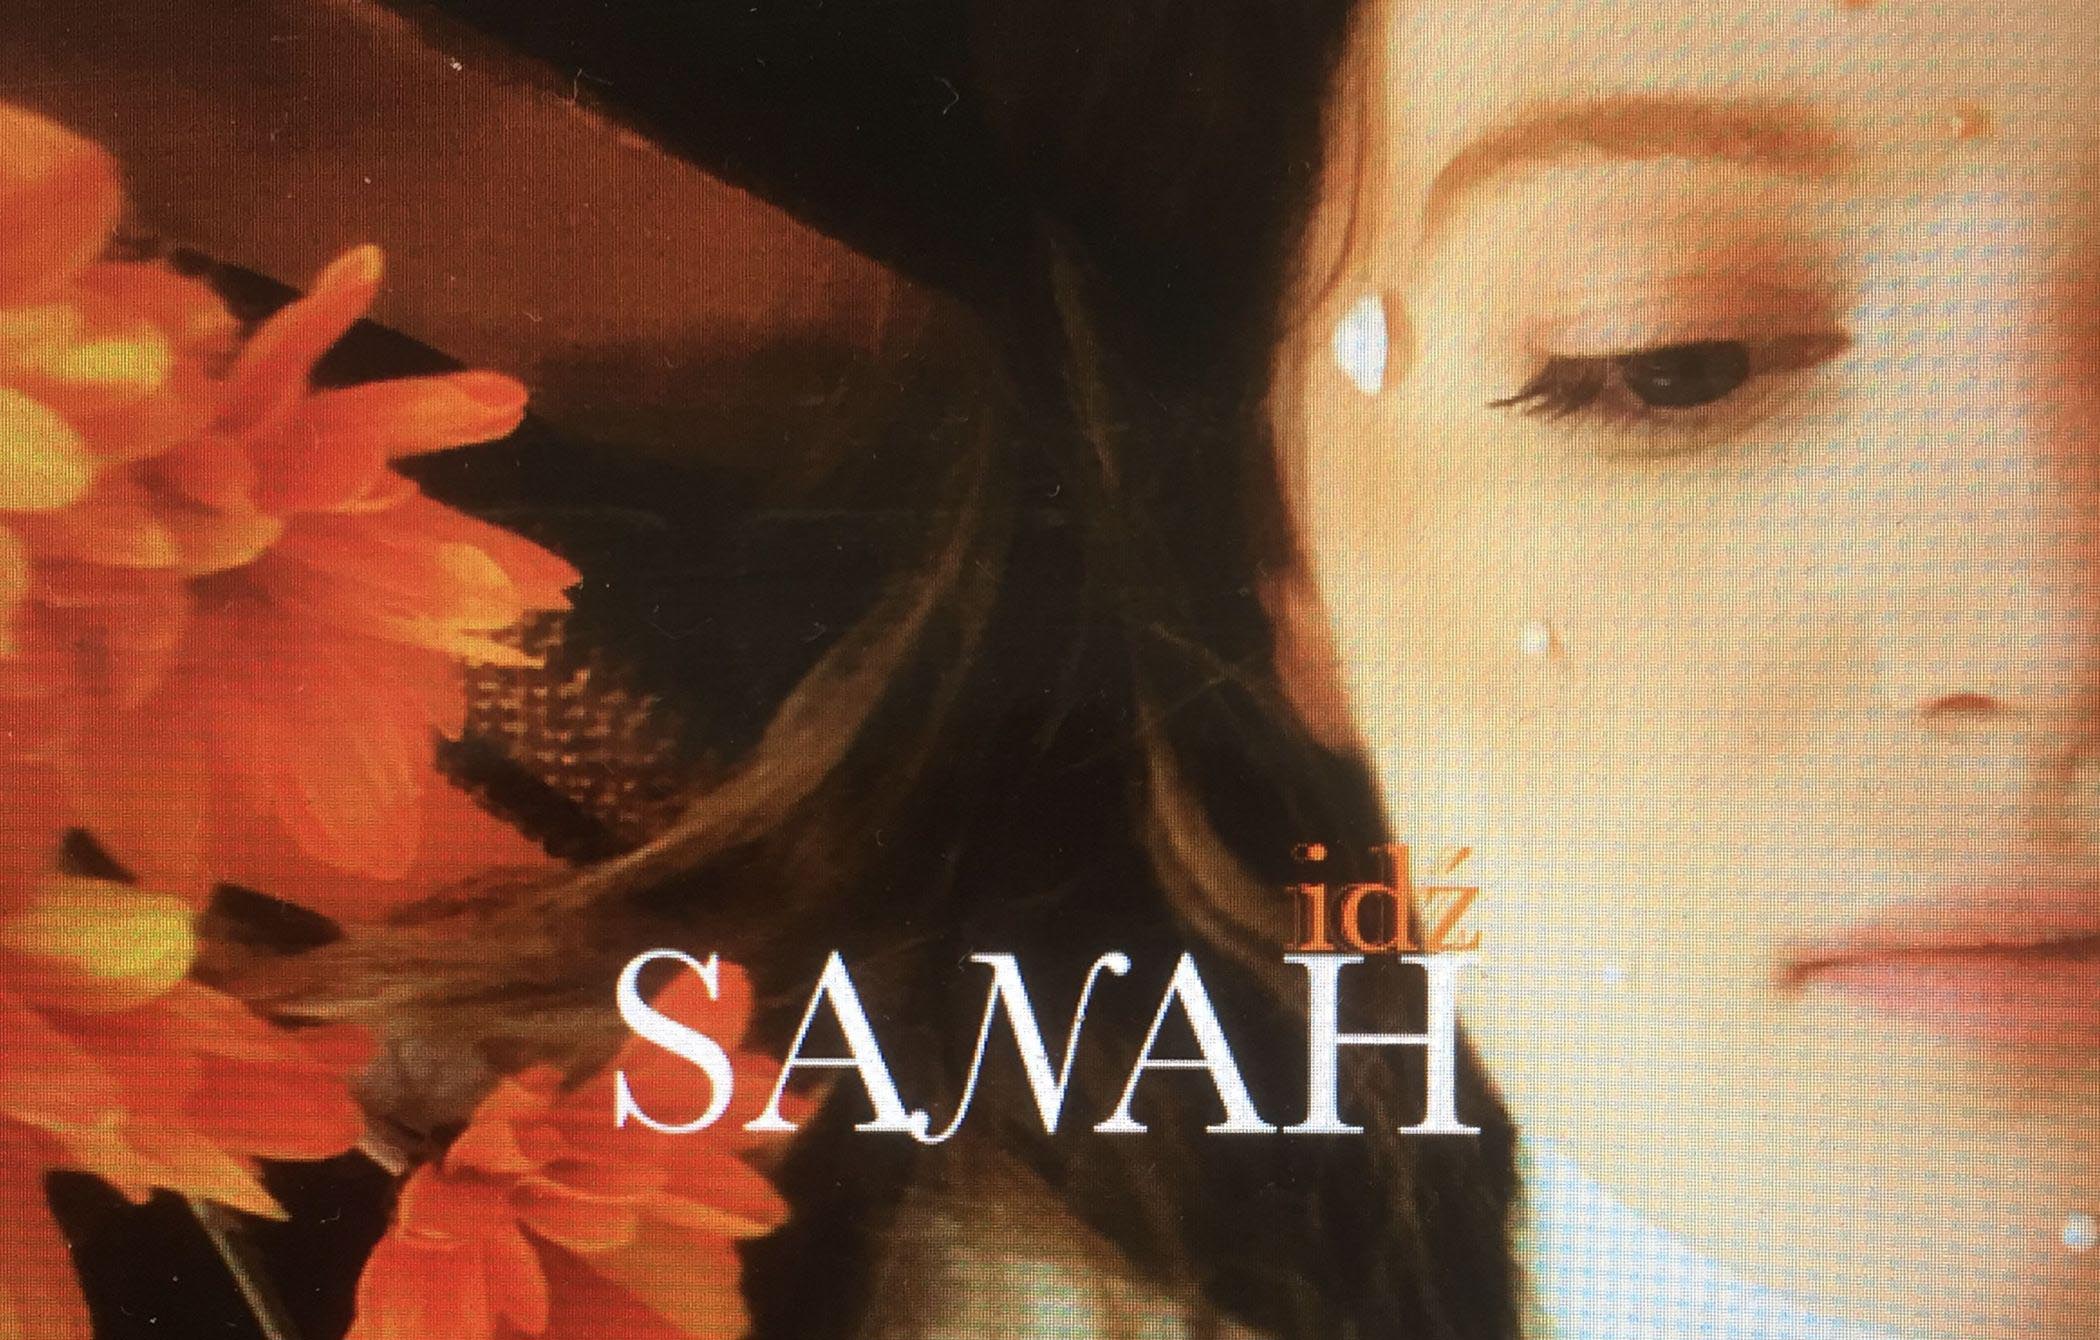 SANAH-idz-cover small